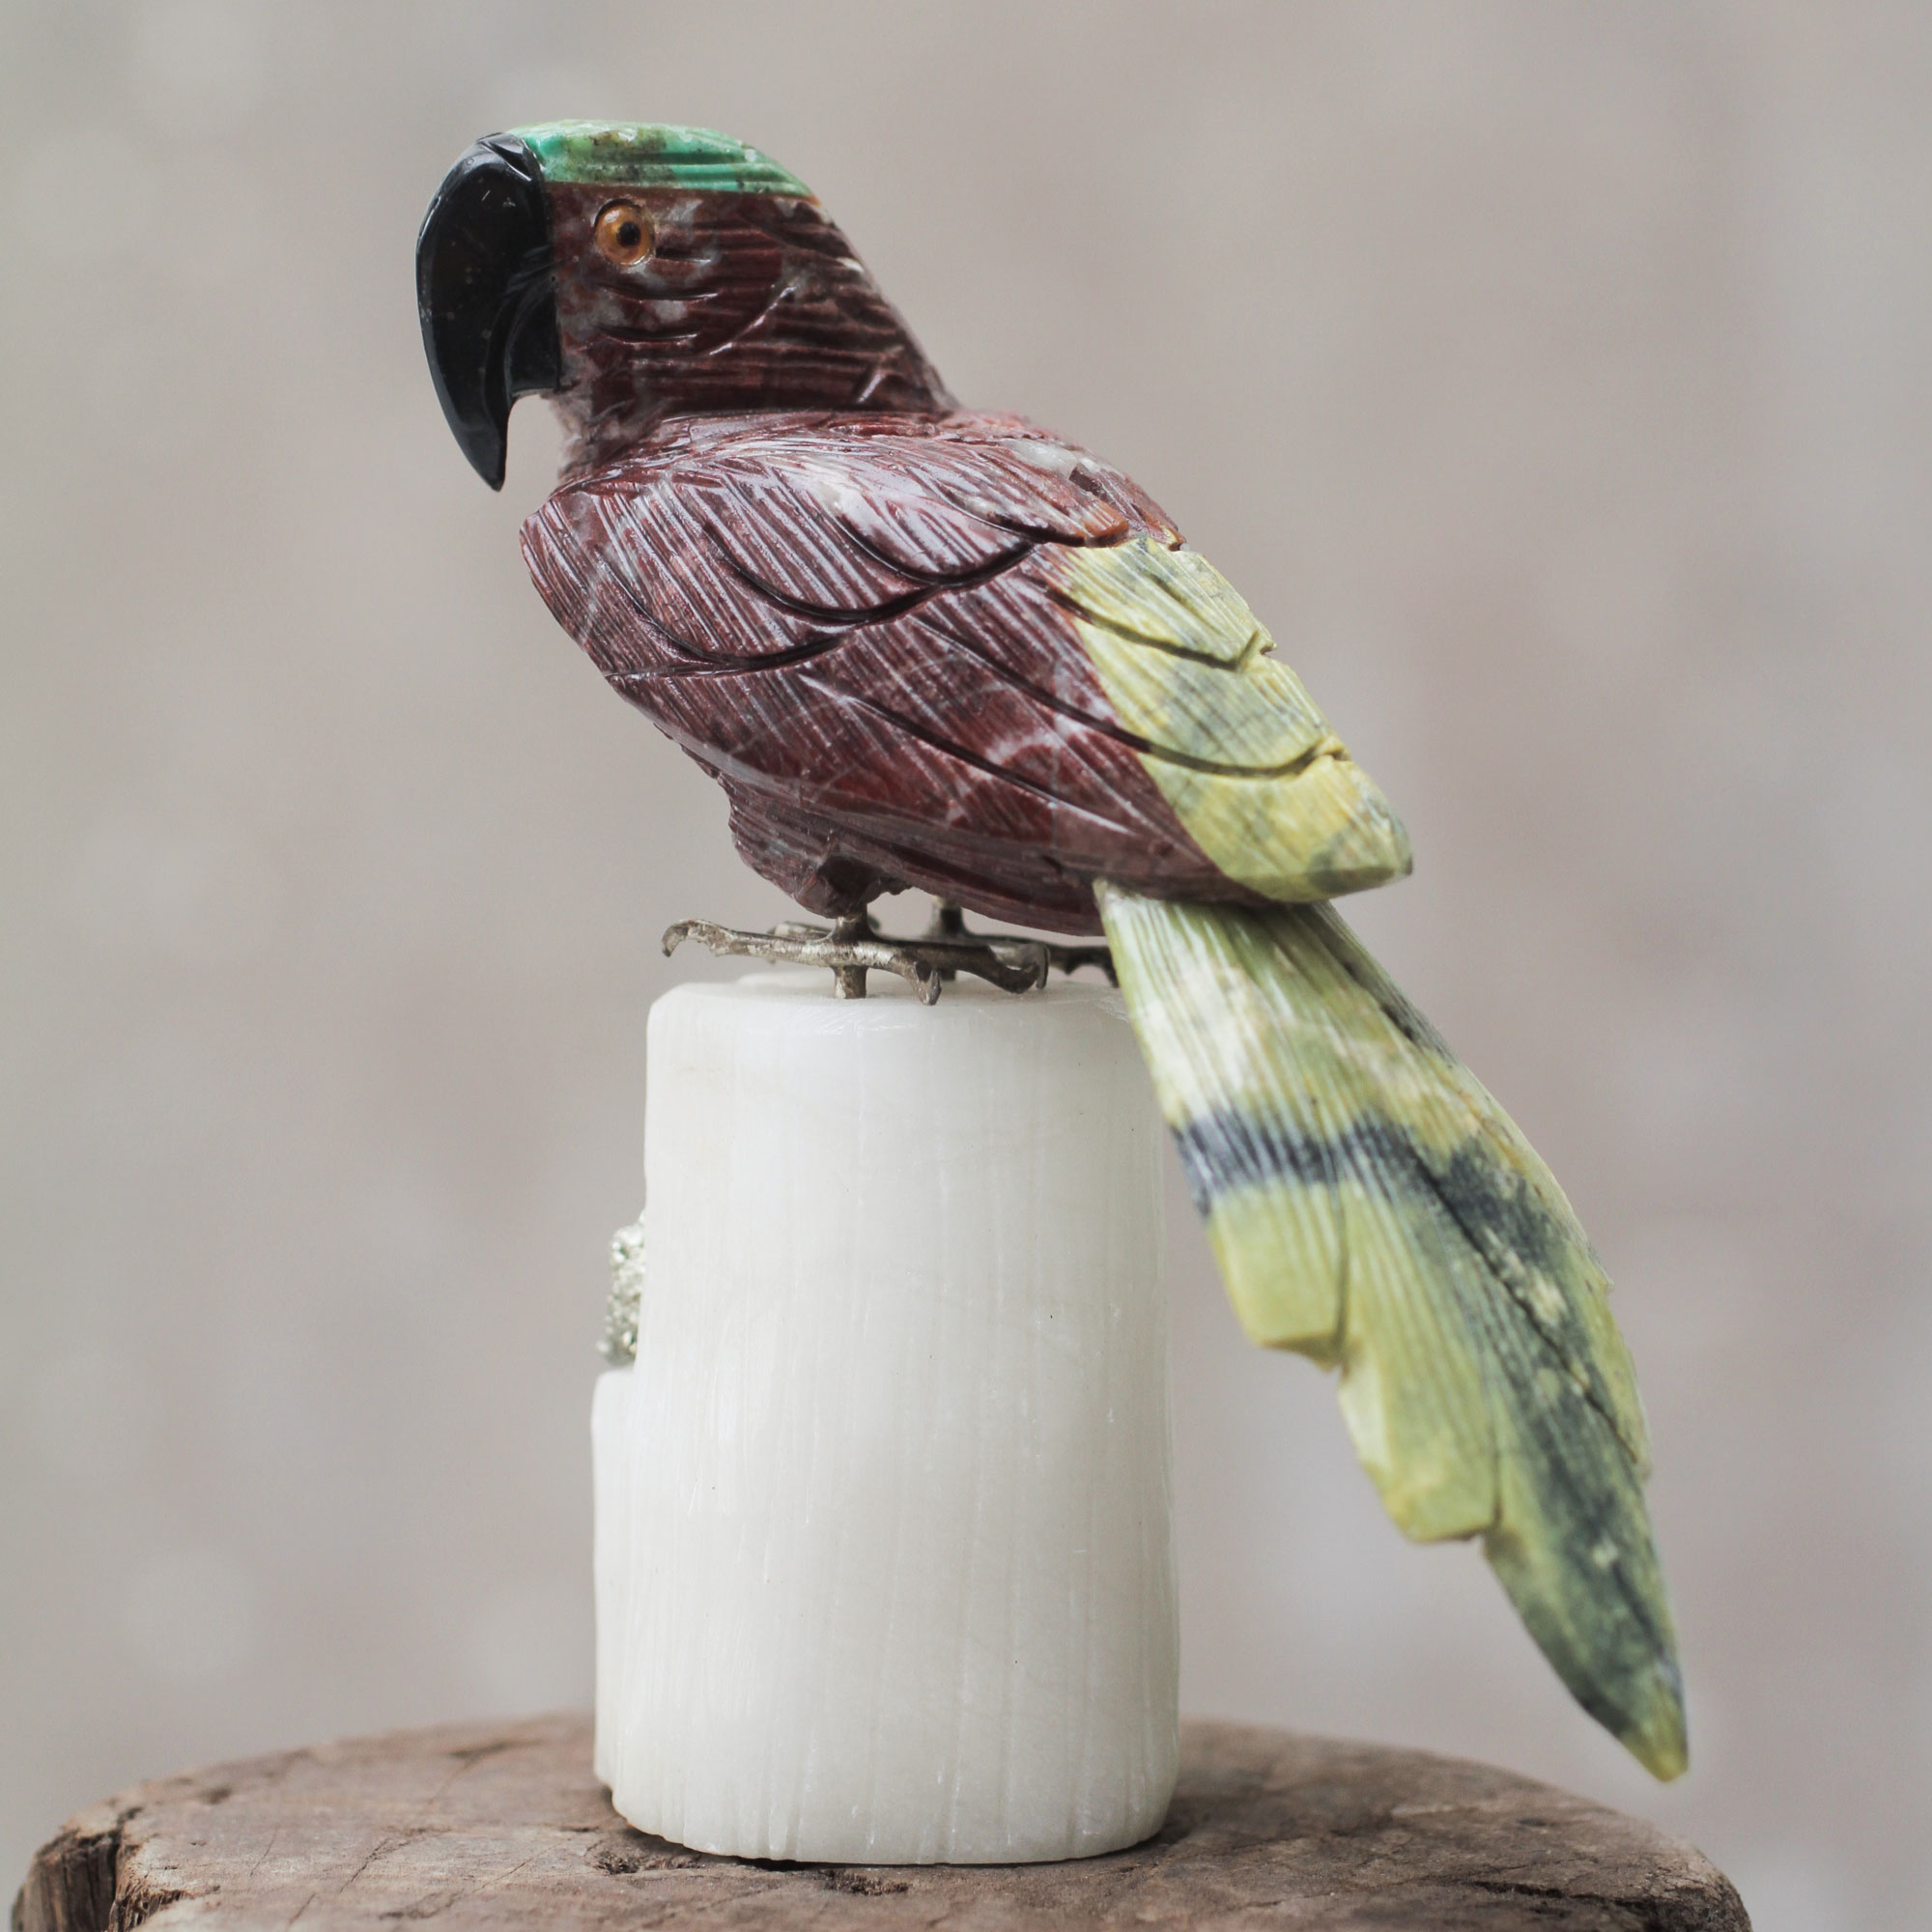 Details about   Handmade Macaw Parrot Bird Sculpture Chrysocolla Quartz Onyx Crystal Carving 